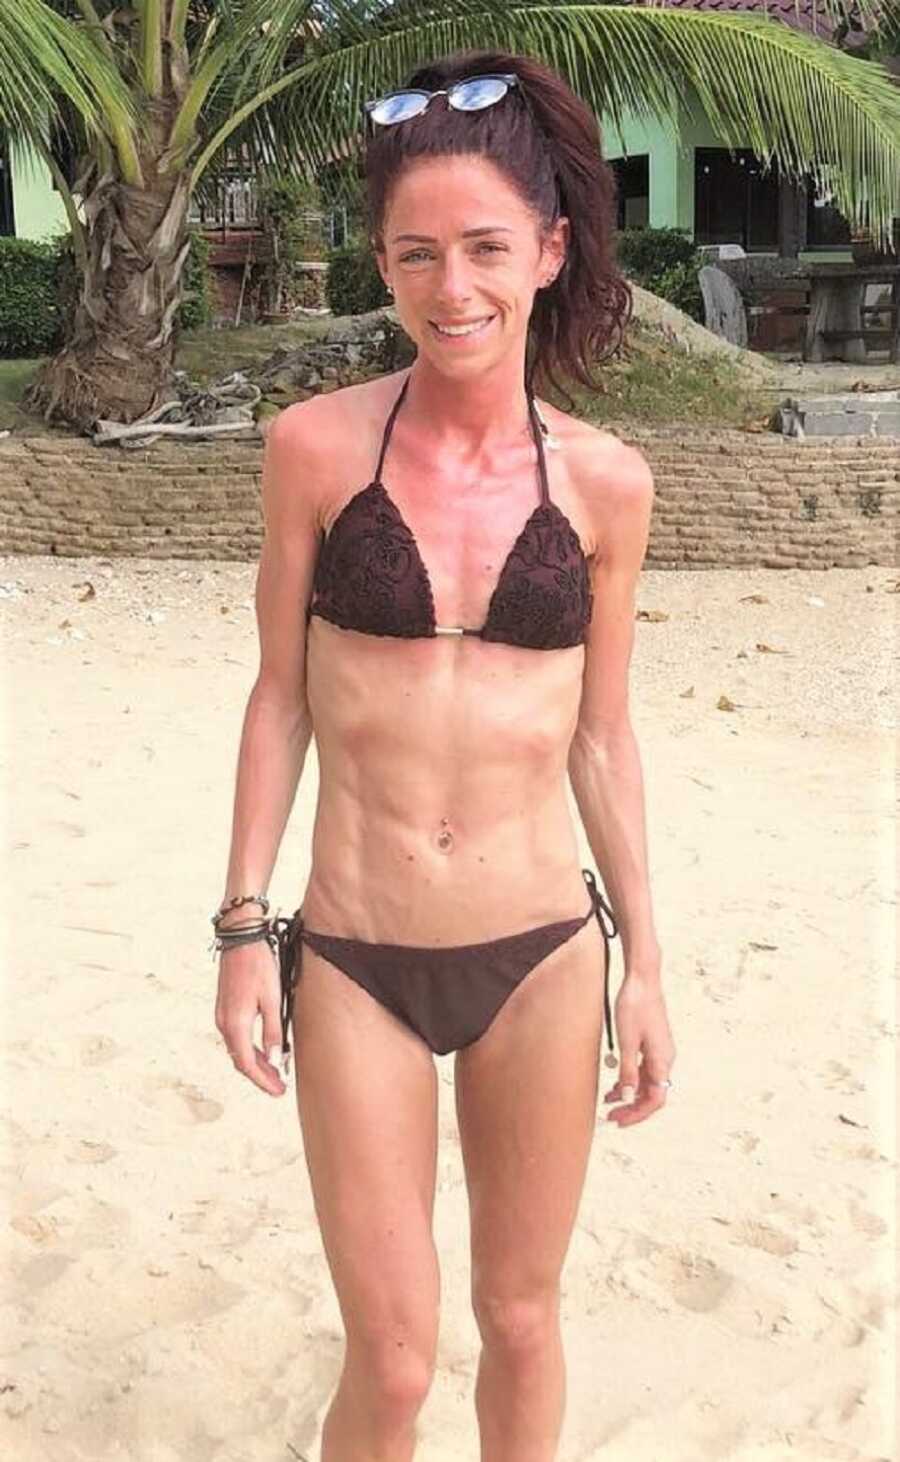 Woman struggling with eating disorder wears bikini at the beach. 